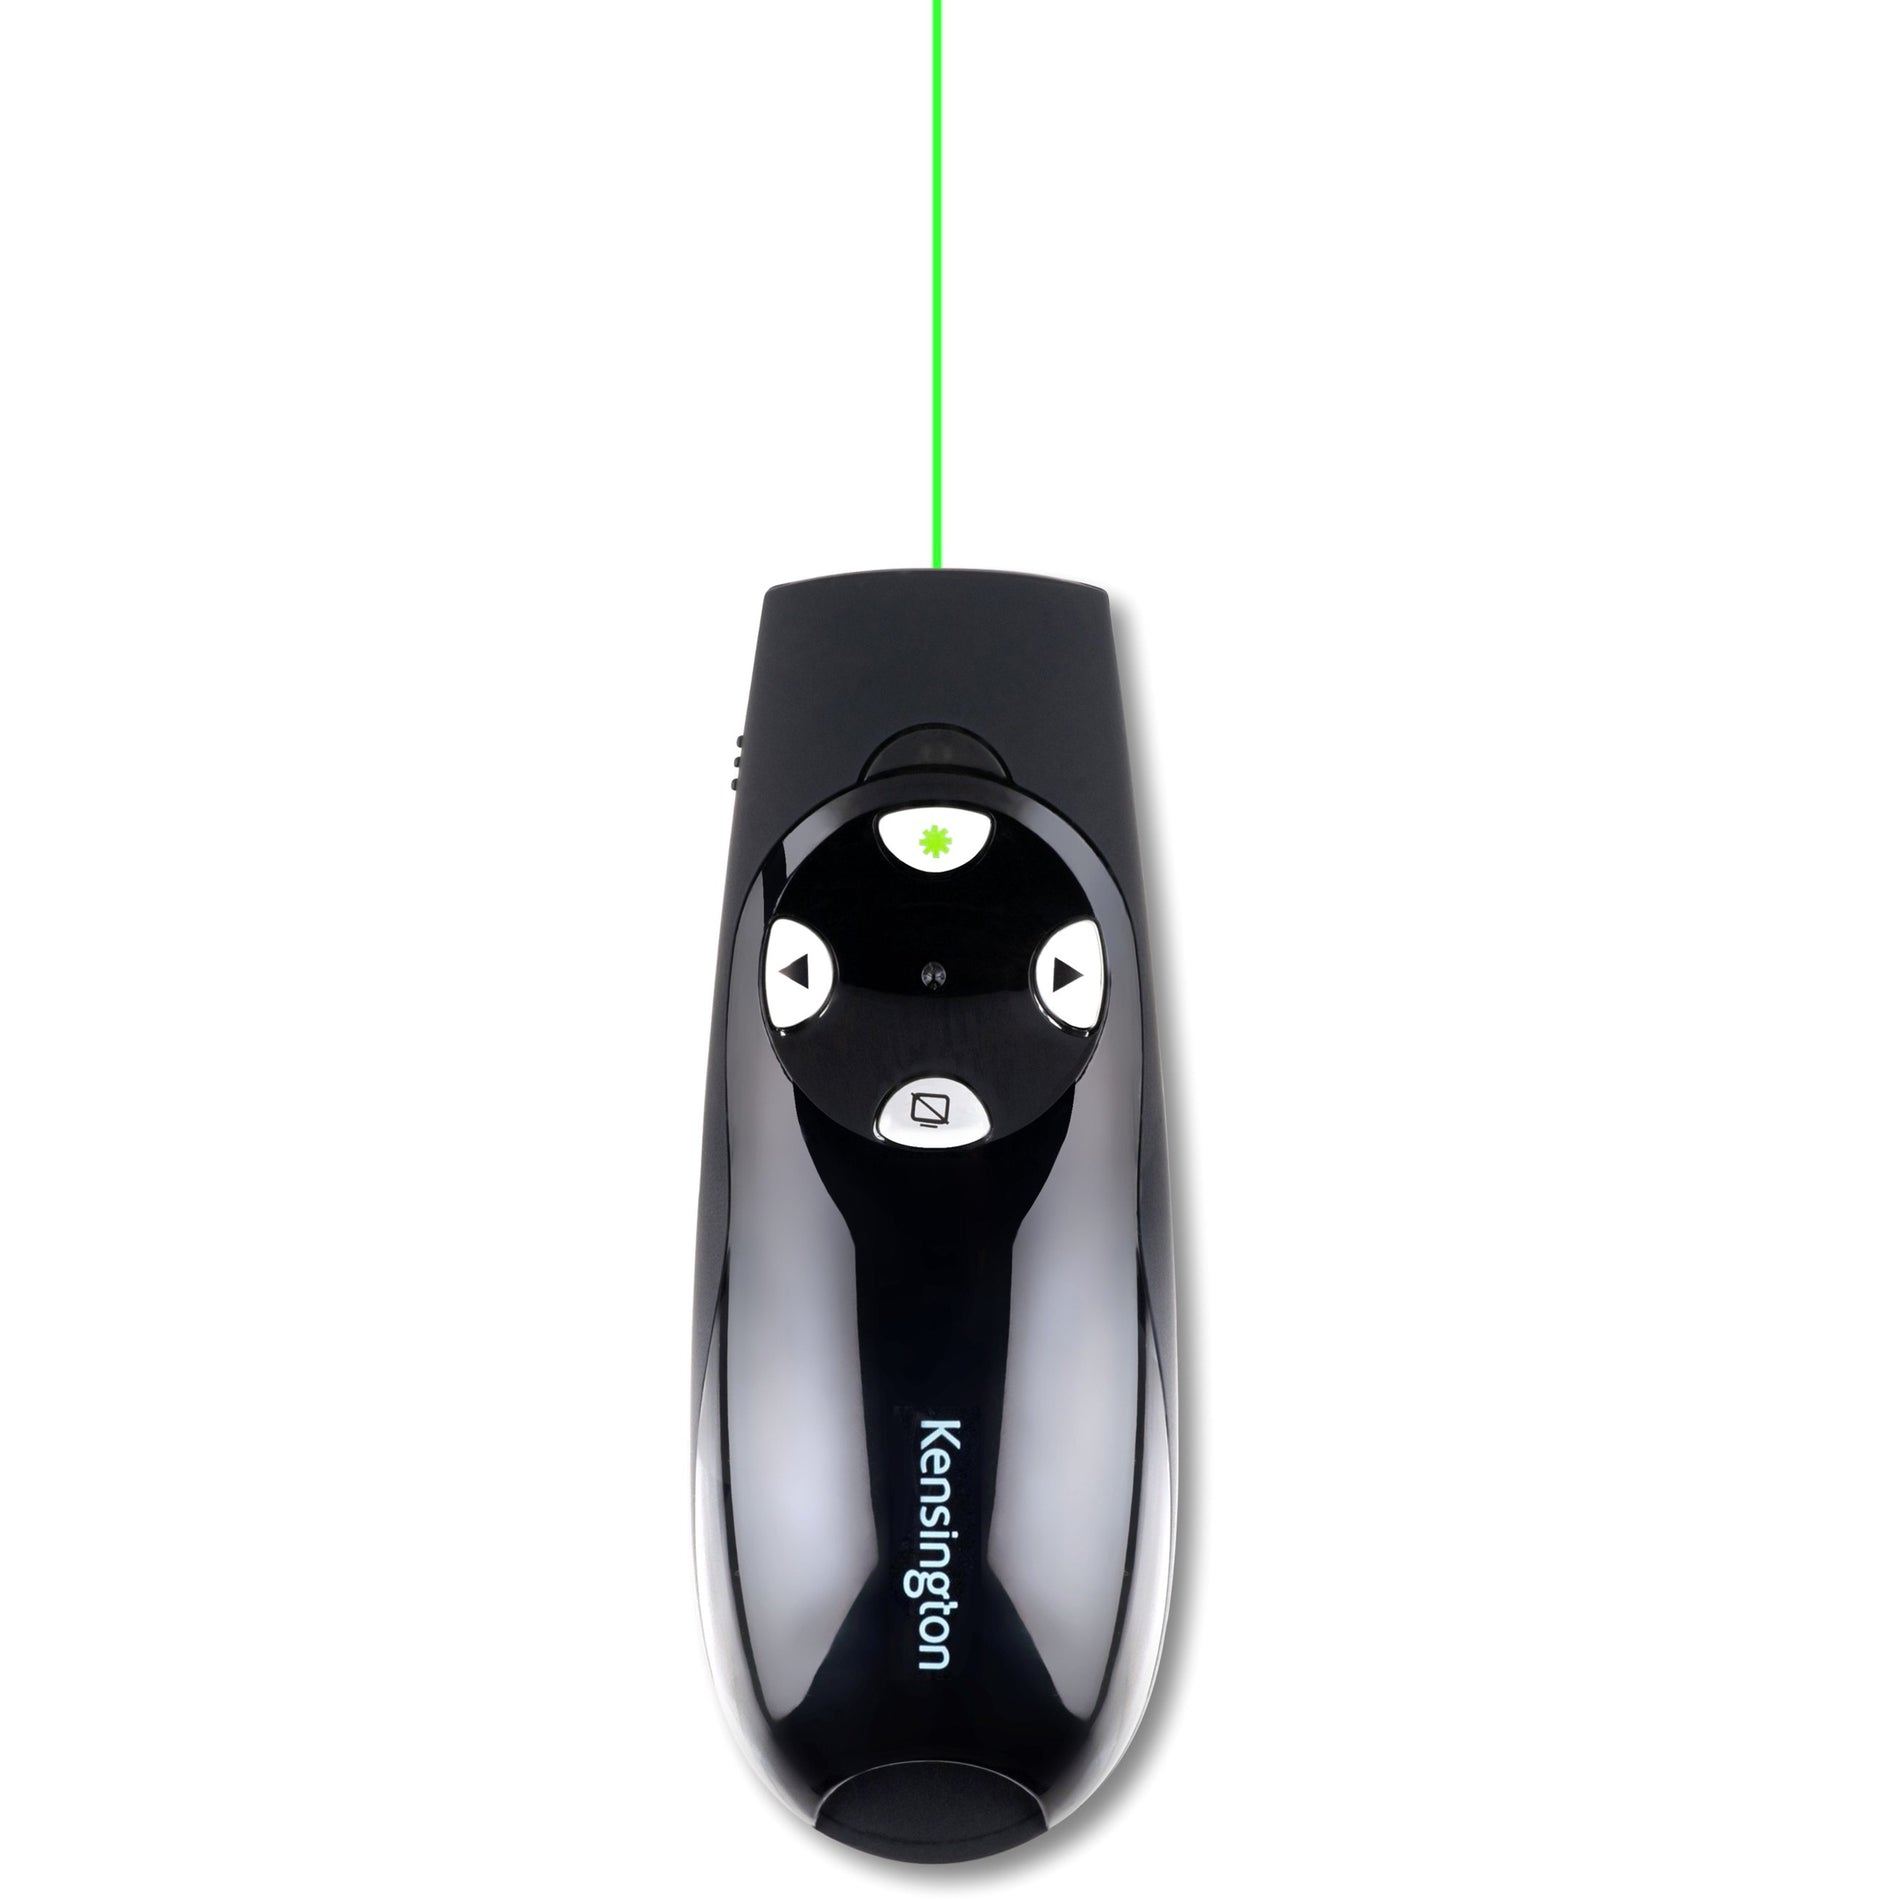 Kensington K75774WW Presenter Expert Wireless with Green Laser - Black, USB Receiver, 2.4 GHz RF Technology